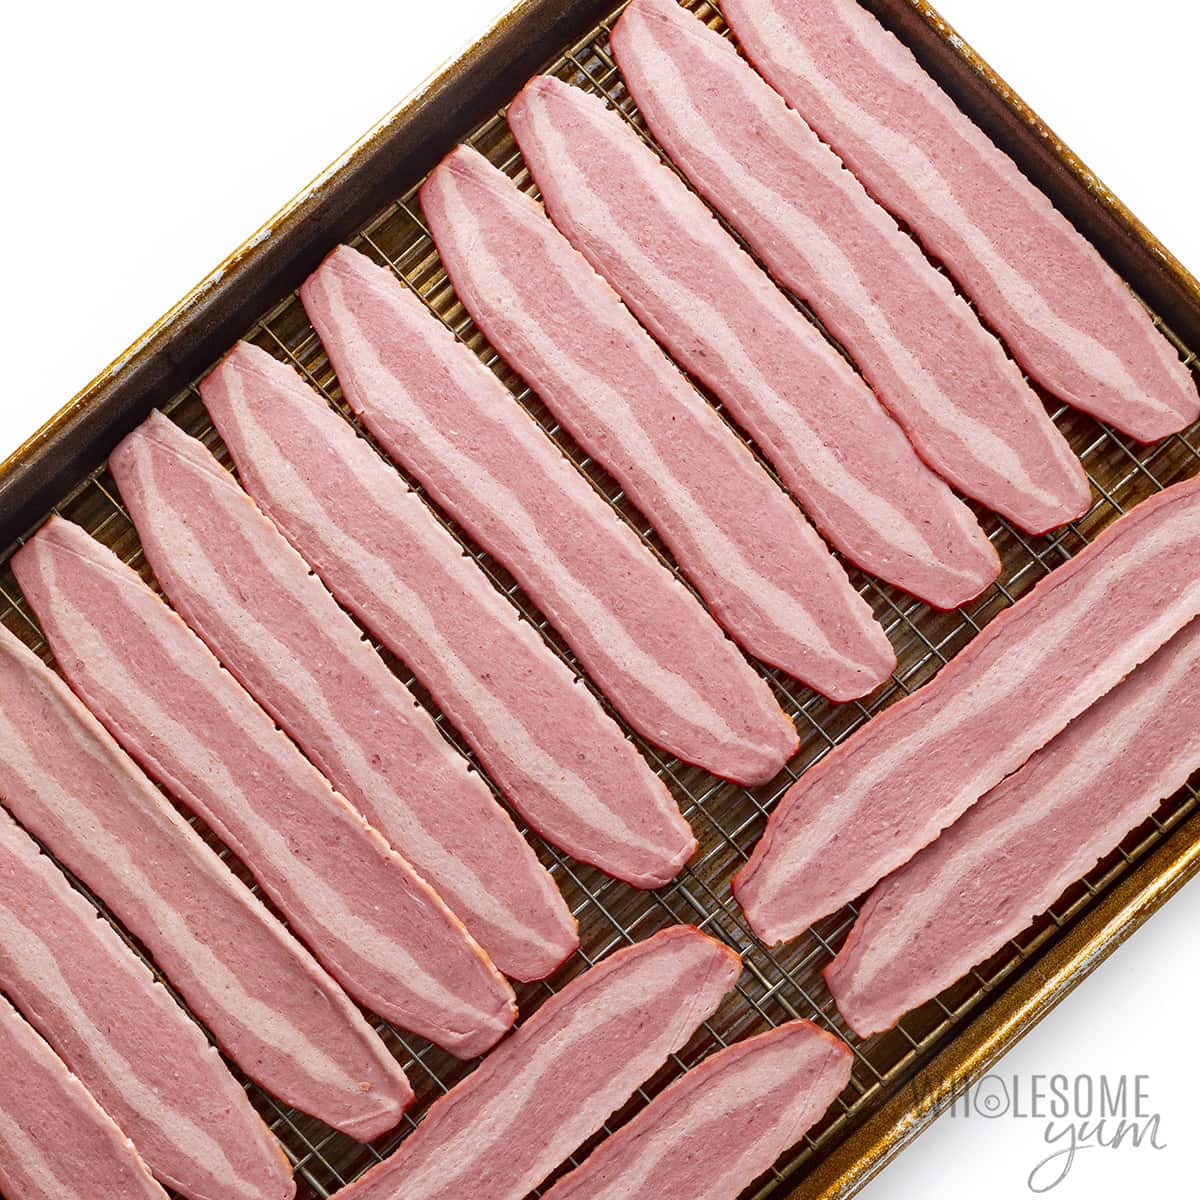 Raw turkey bacon slices arranged on a baking sheet.